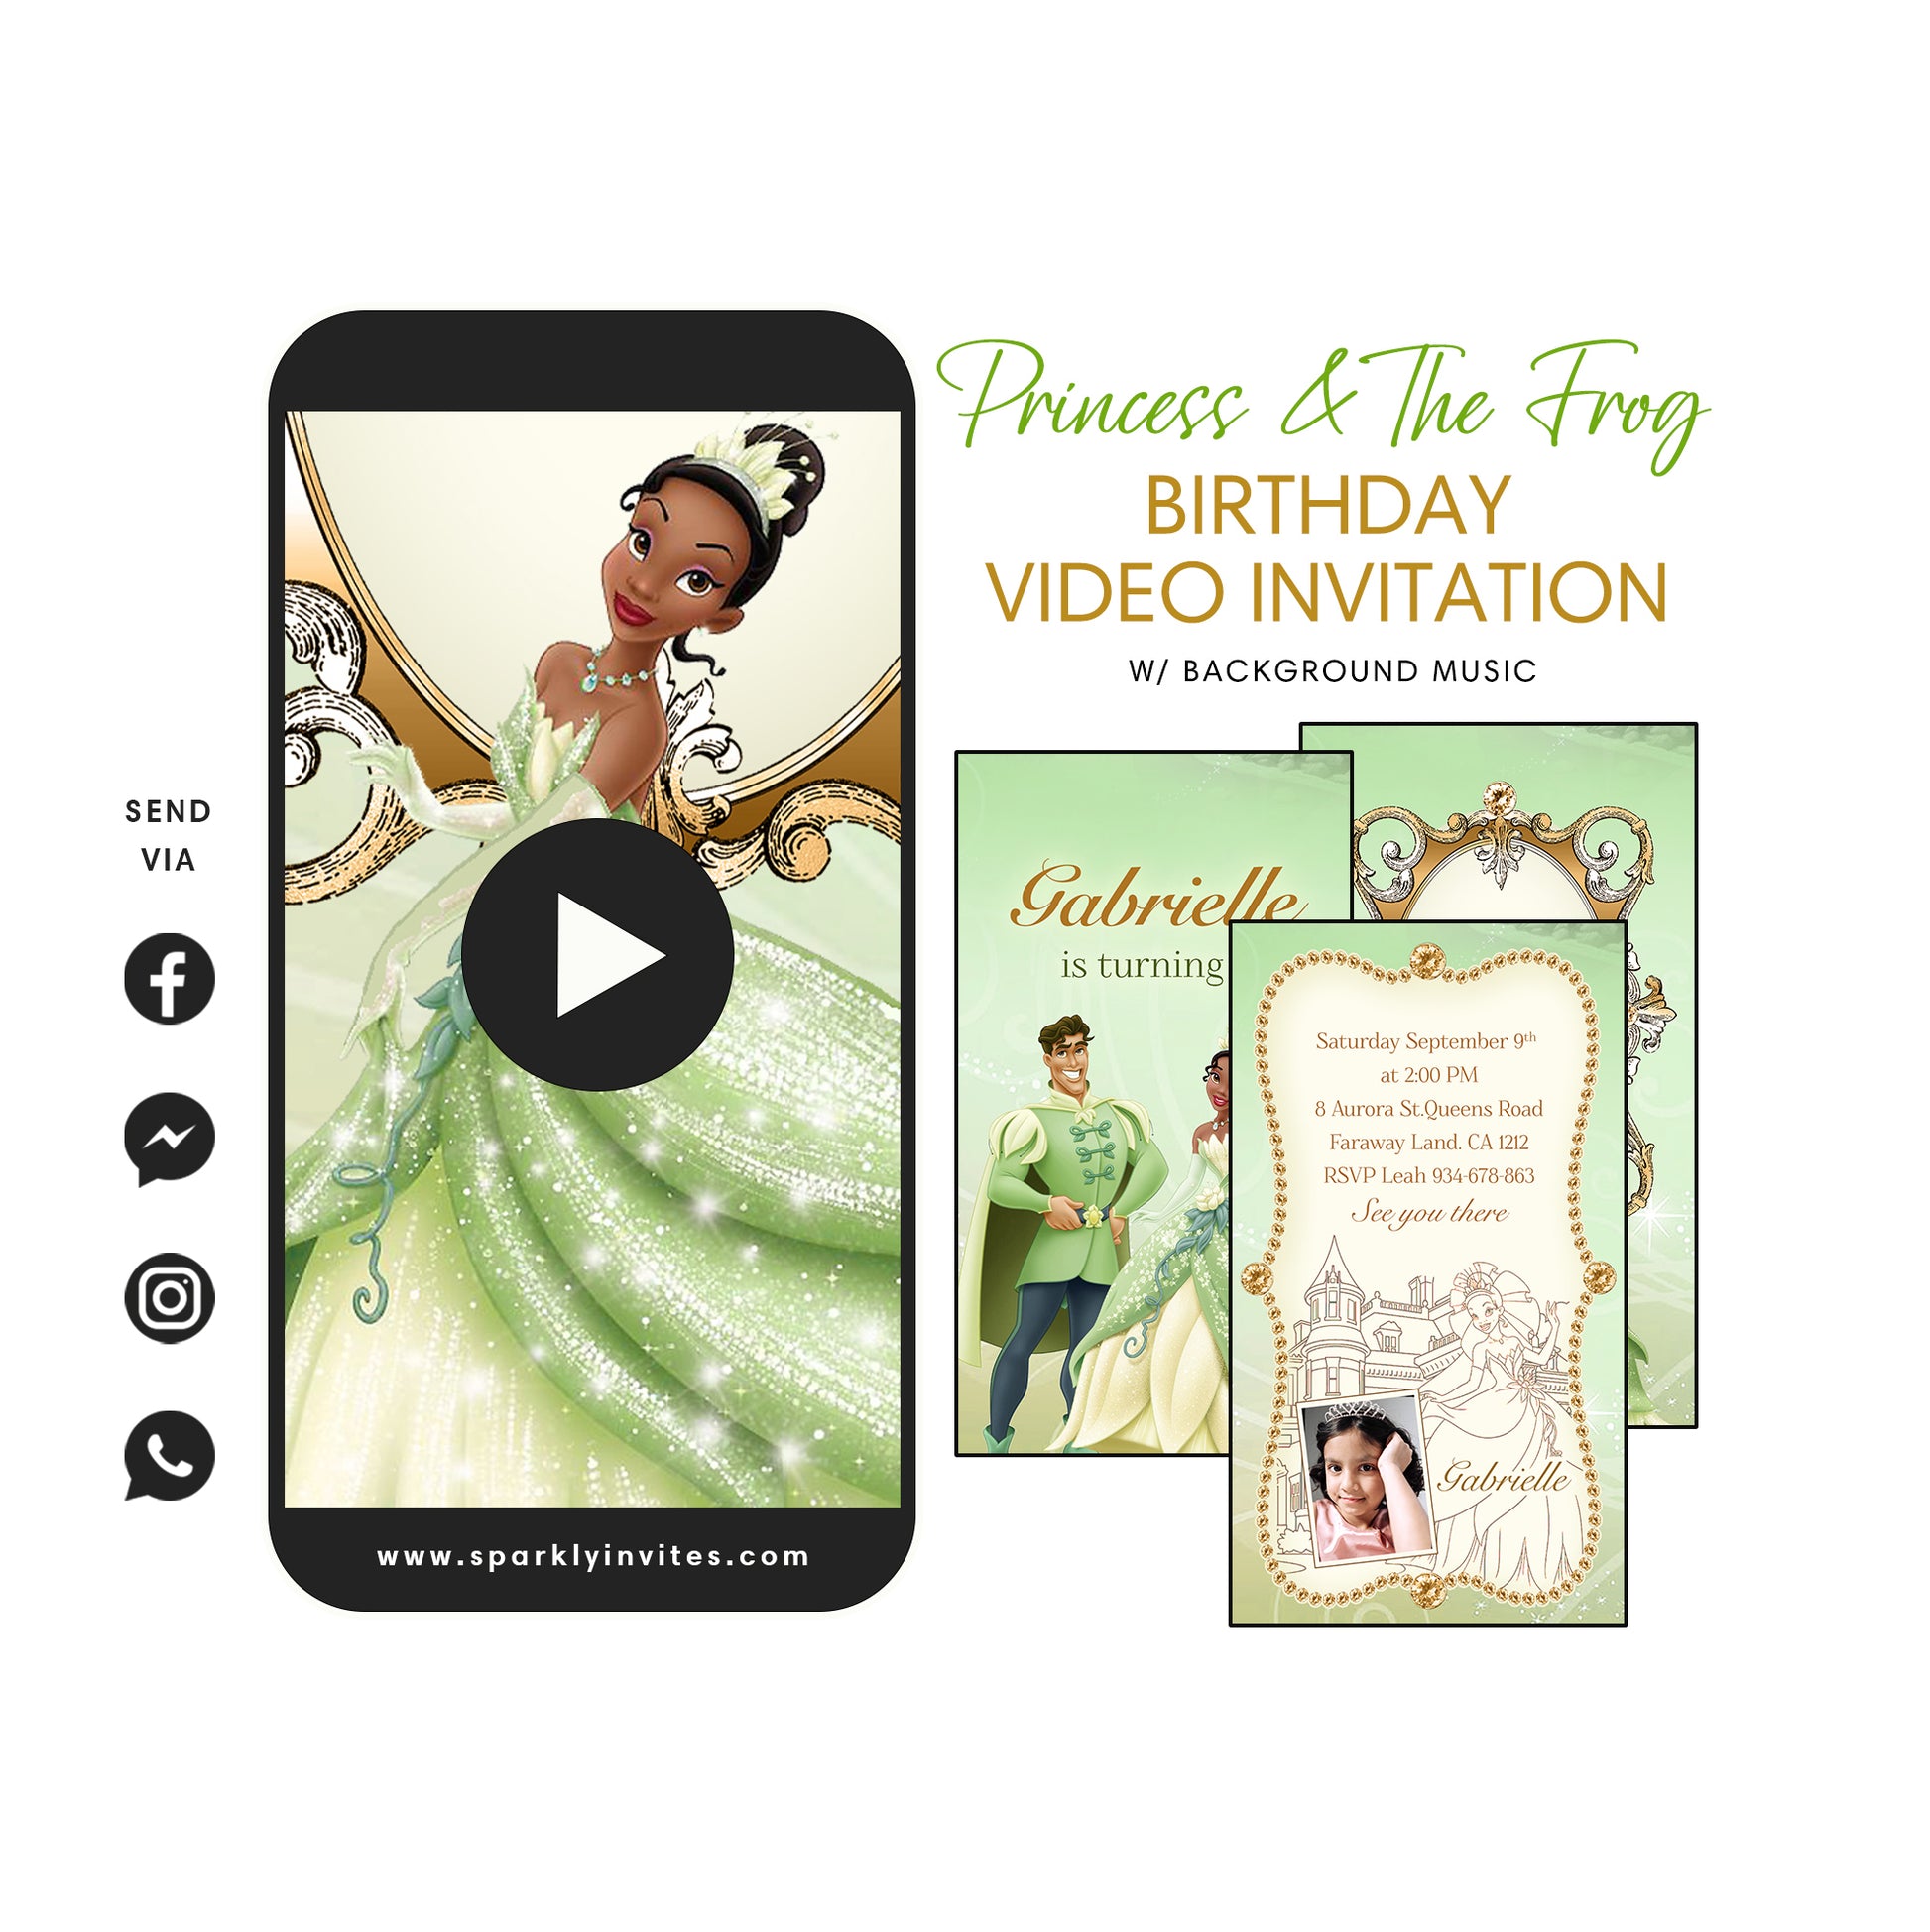 Tiana Princess & the frog video invitation 